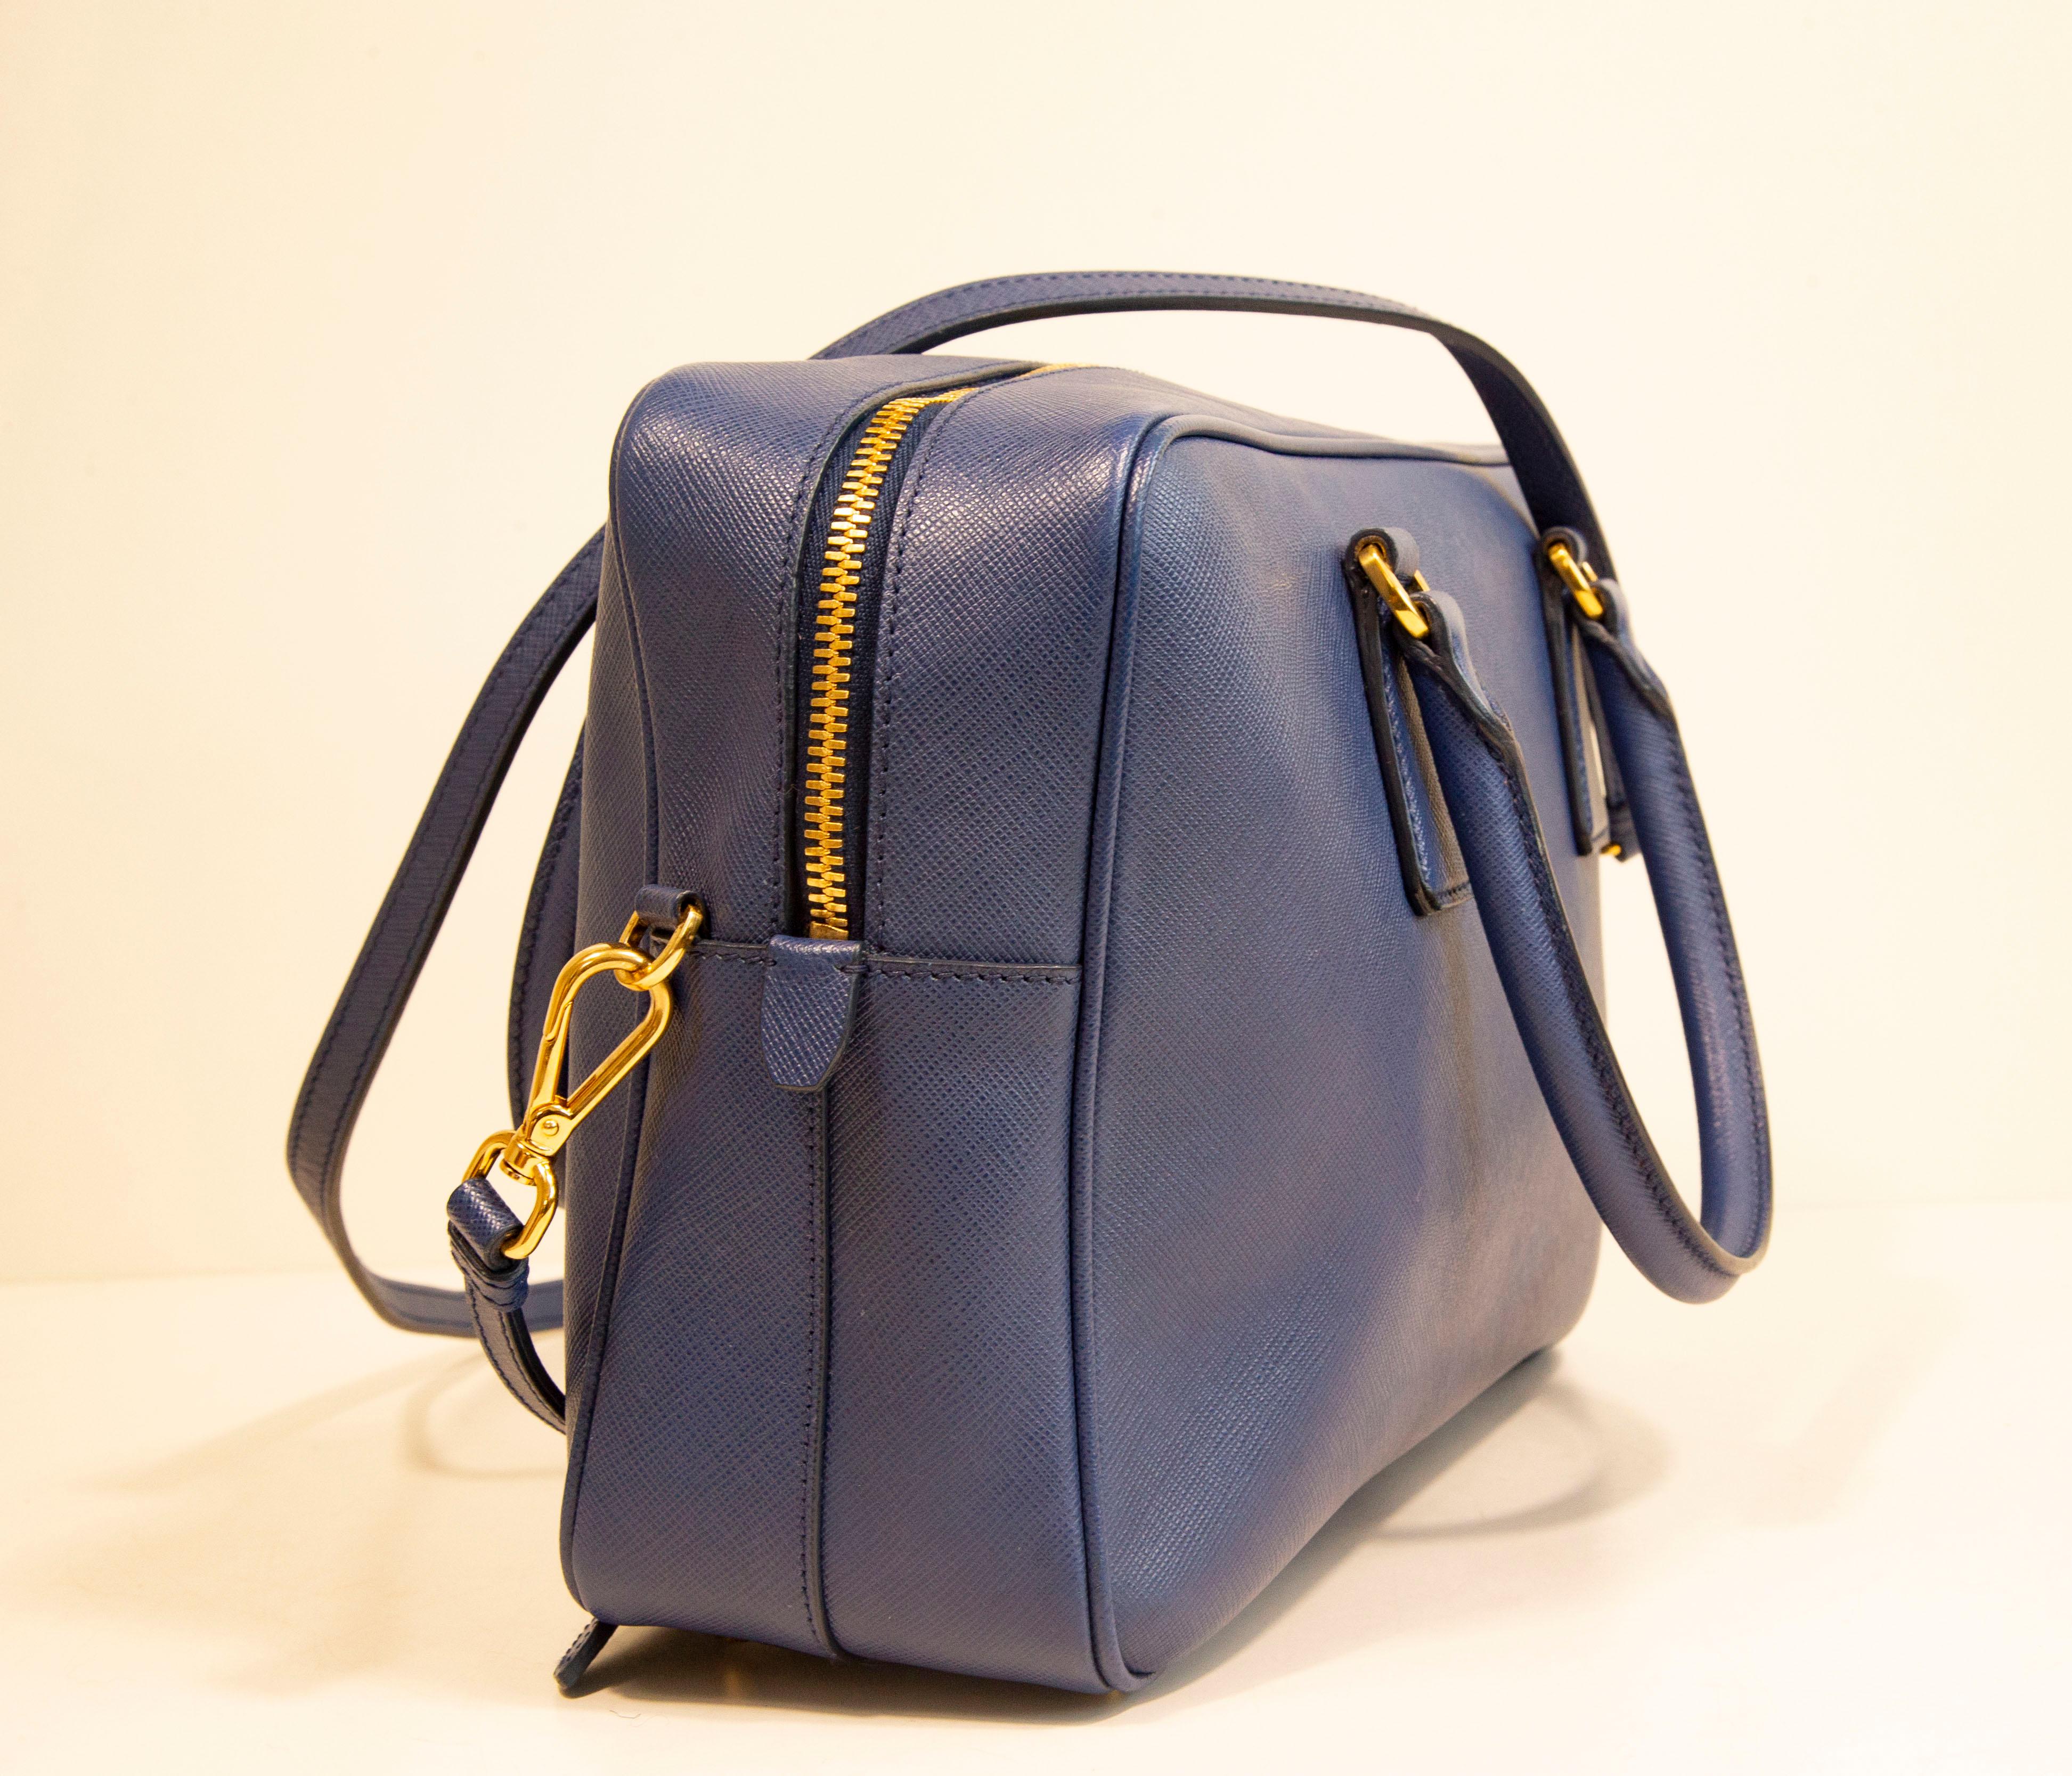  Prada Galleria Two Way Bag in Blue Saffiano Leather 3